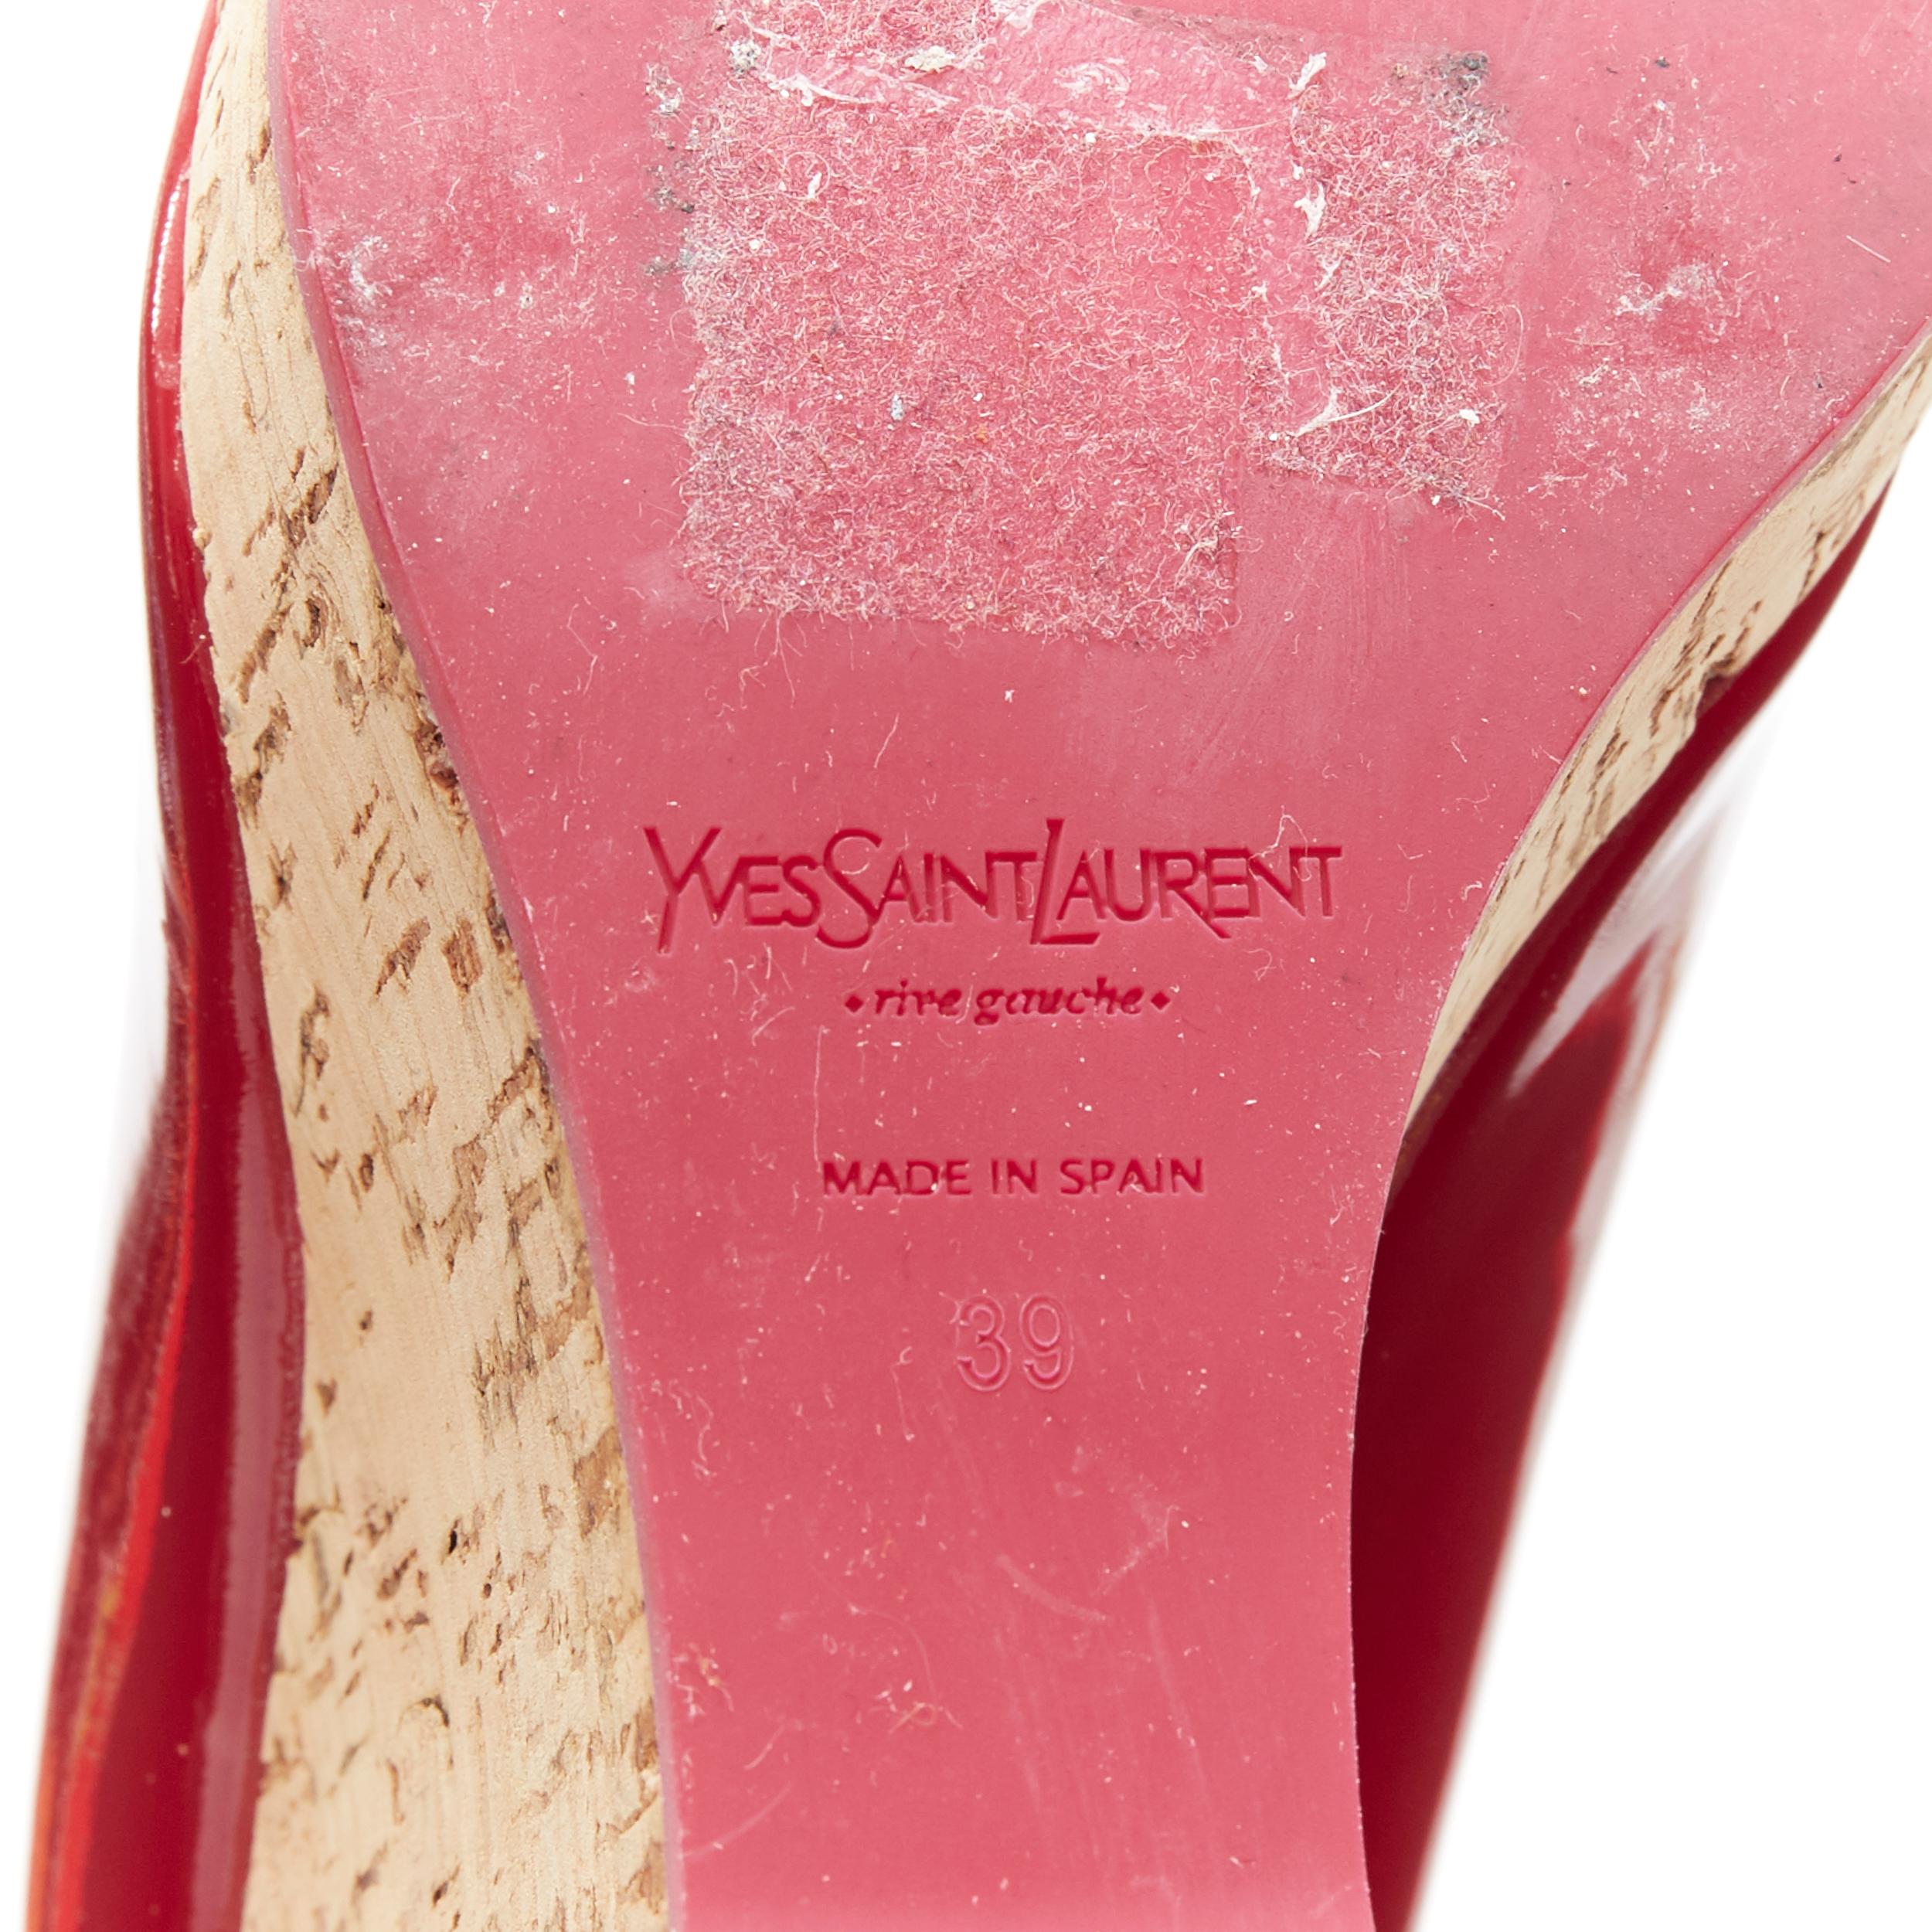 YVES SAINT LAURENT YSL red patent leather round toe cork wedge platform EU39 6